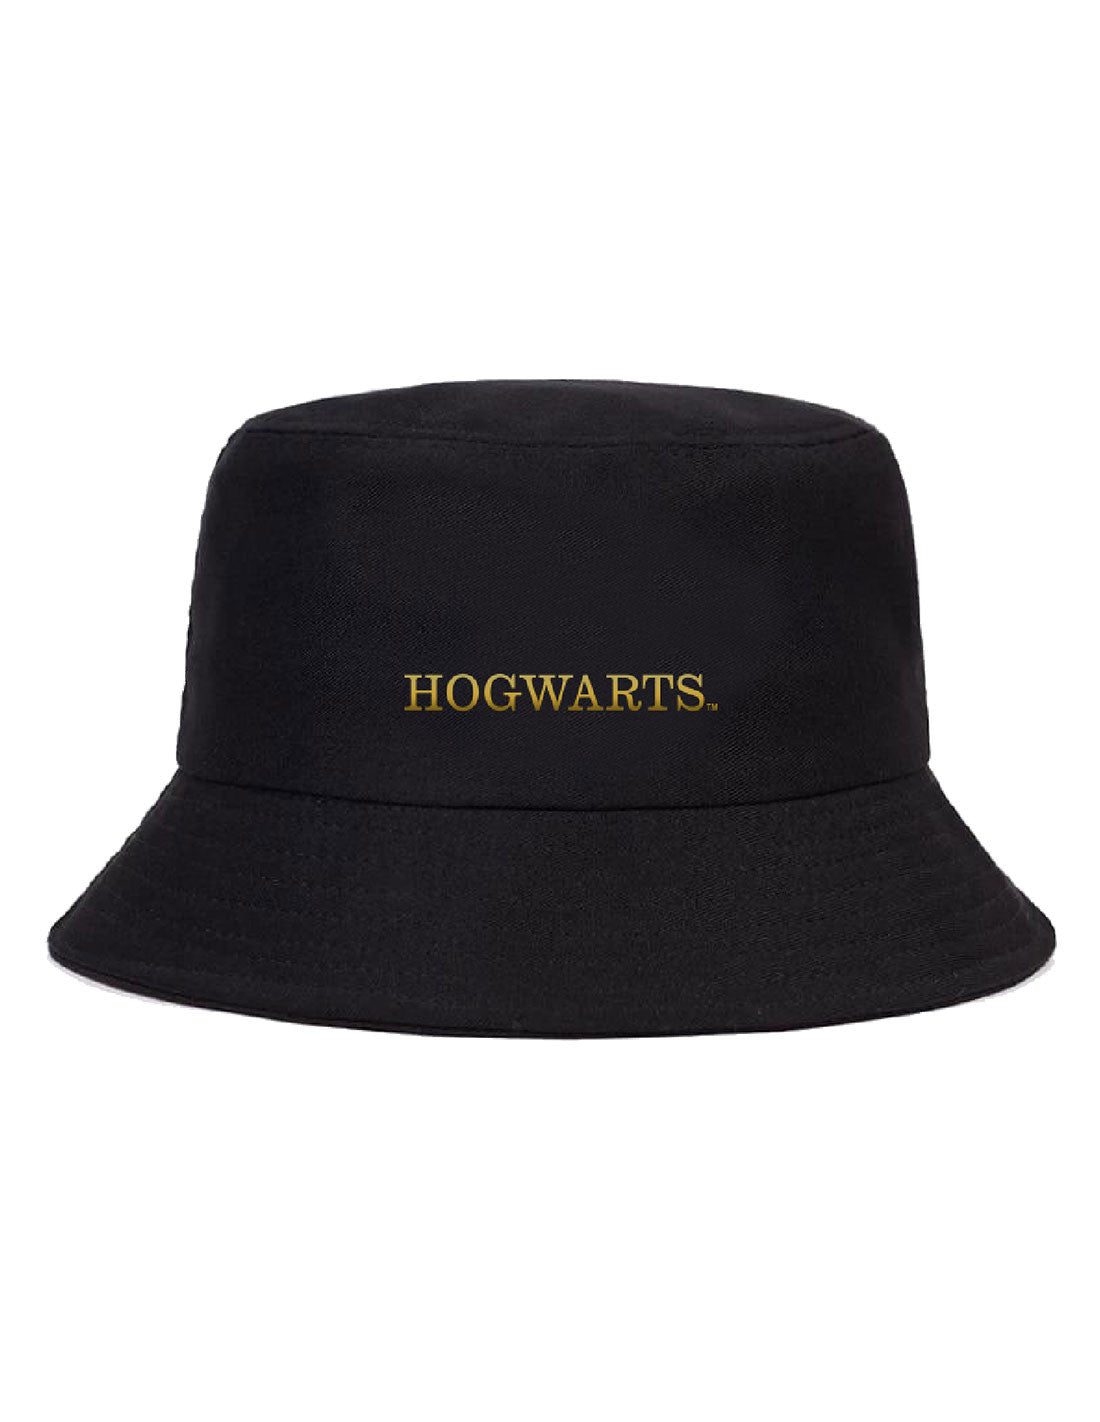 Bob Harry Potter - Hogwarts Badge